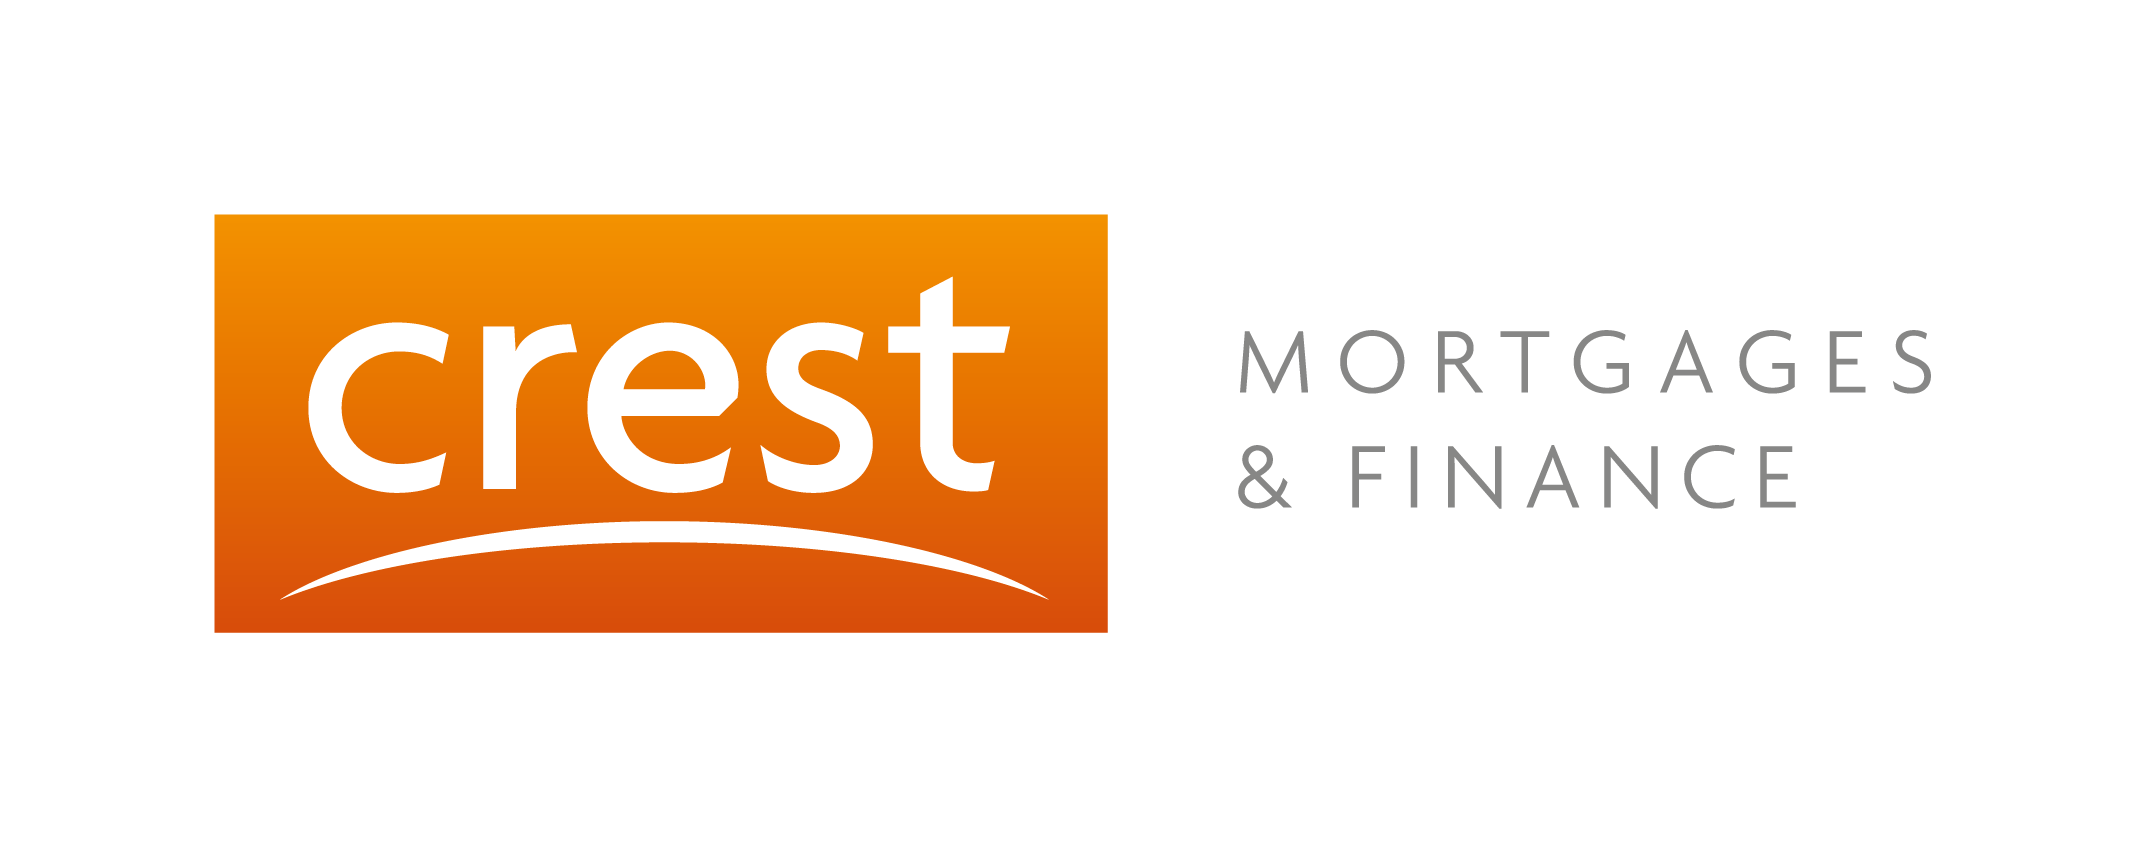 Crest Mortgages & Finance